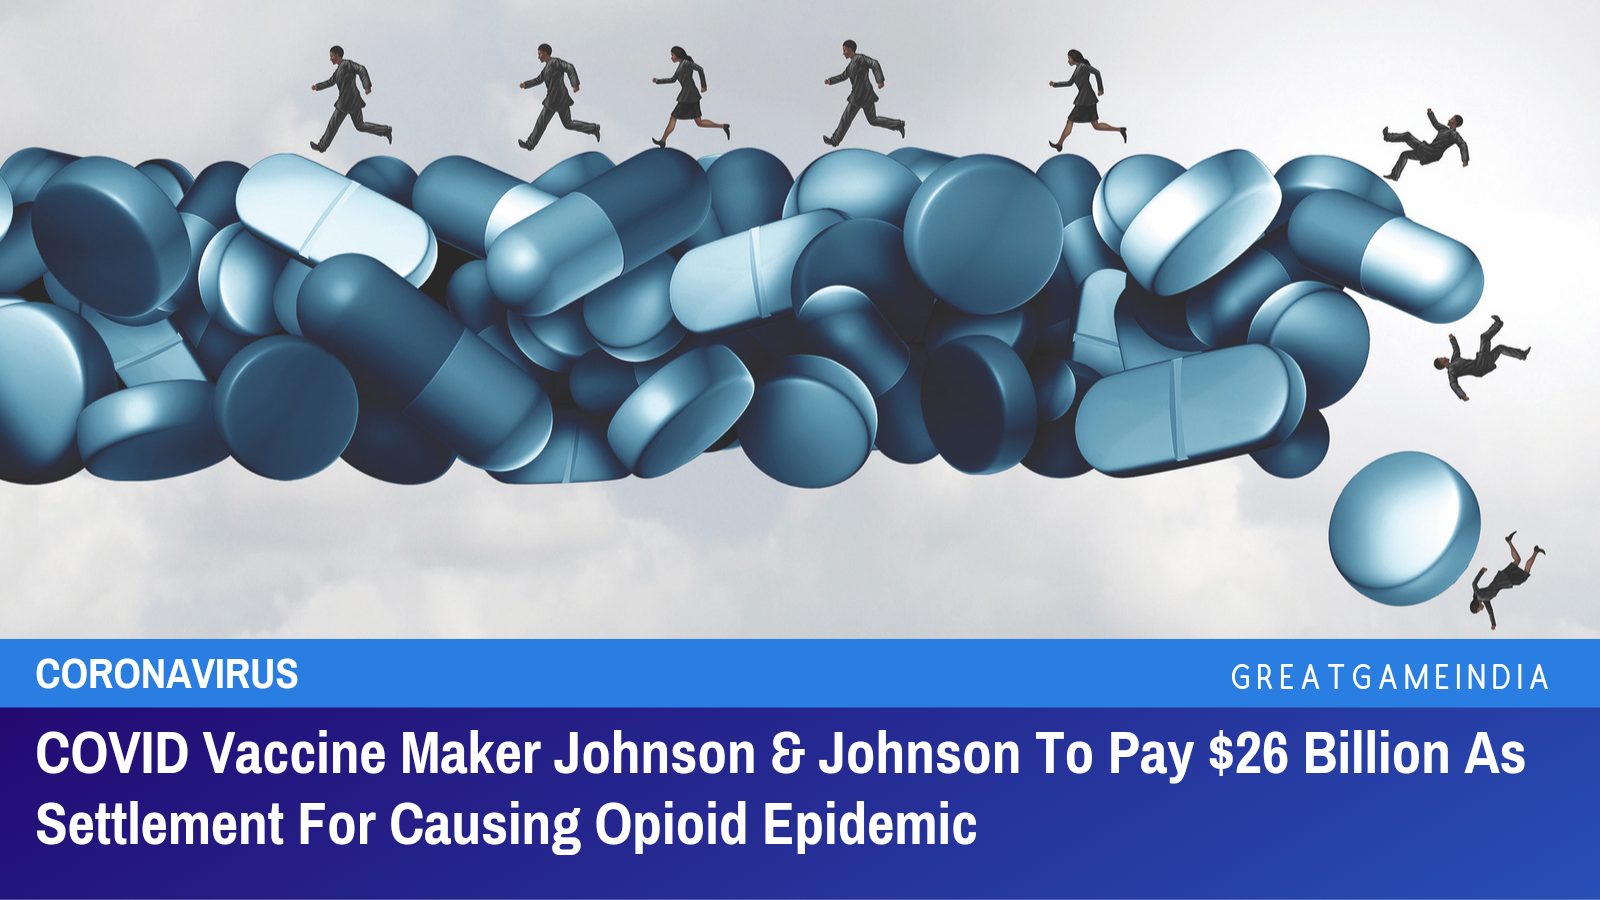 COVID Vaccine Maker Johnson & Johnson To Pay $26 Billion As Settlement For Causing Opioid Epidemic